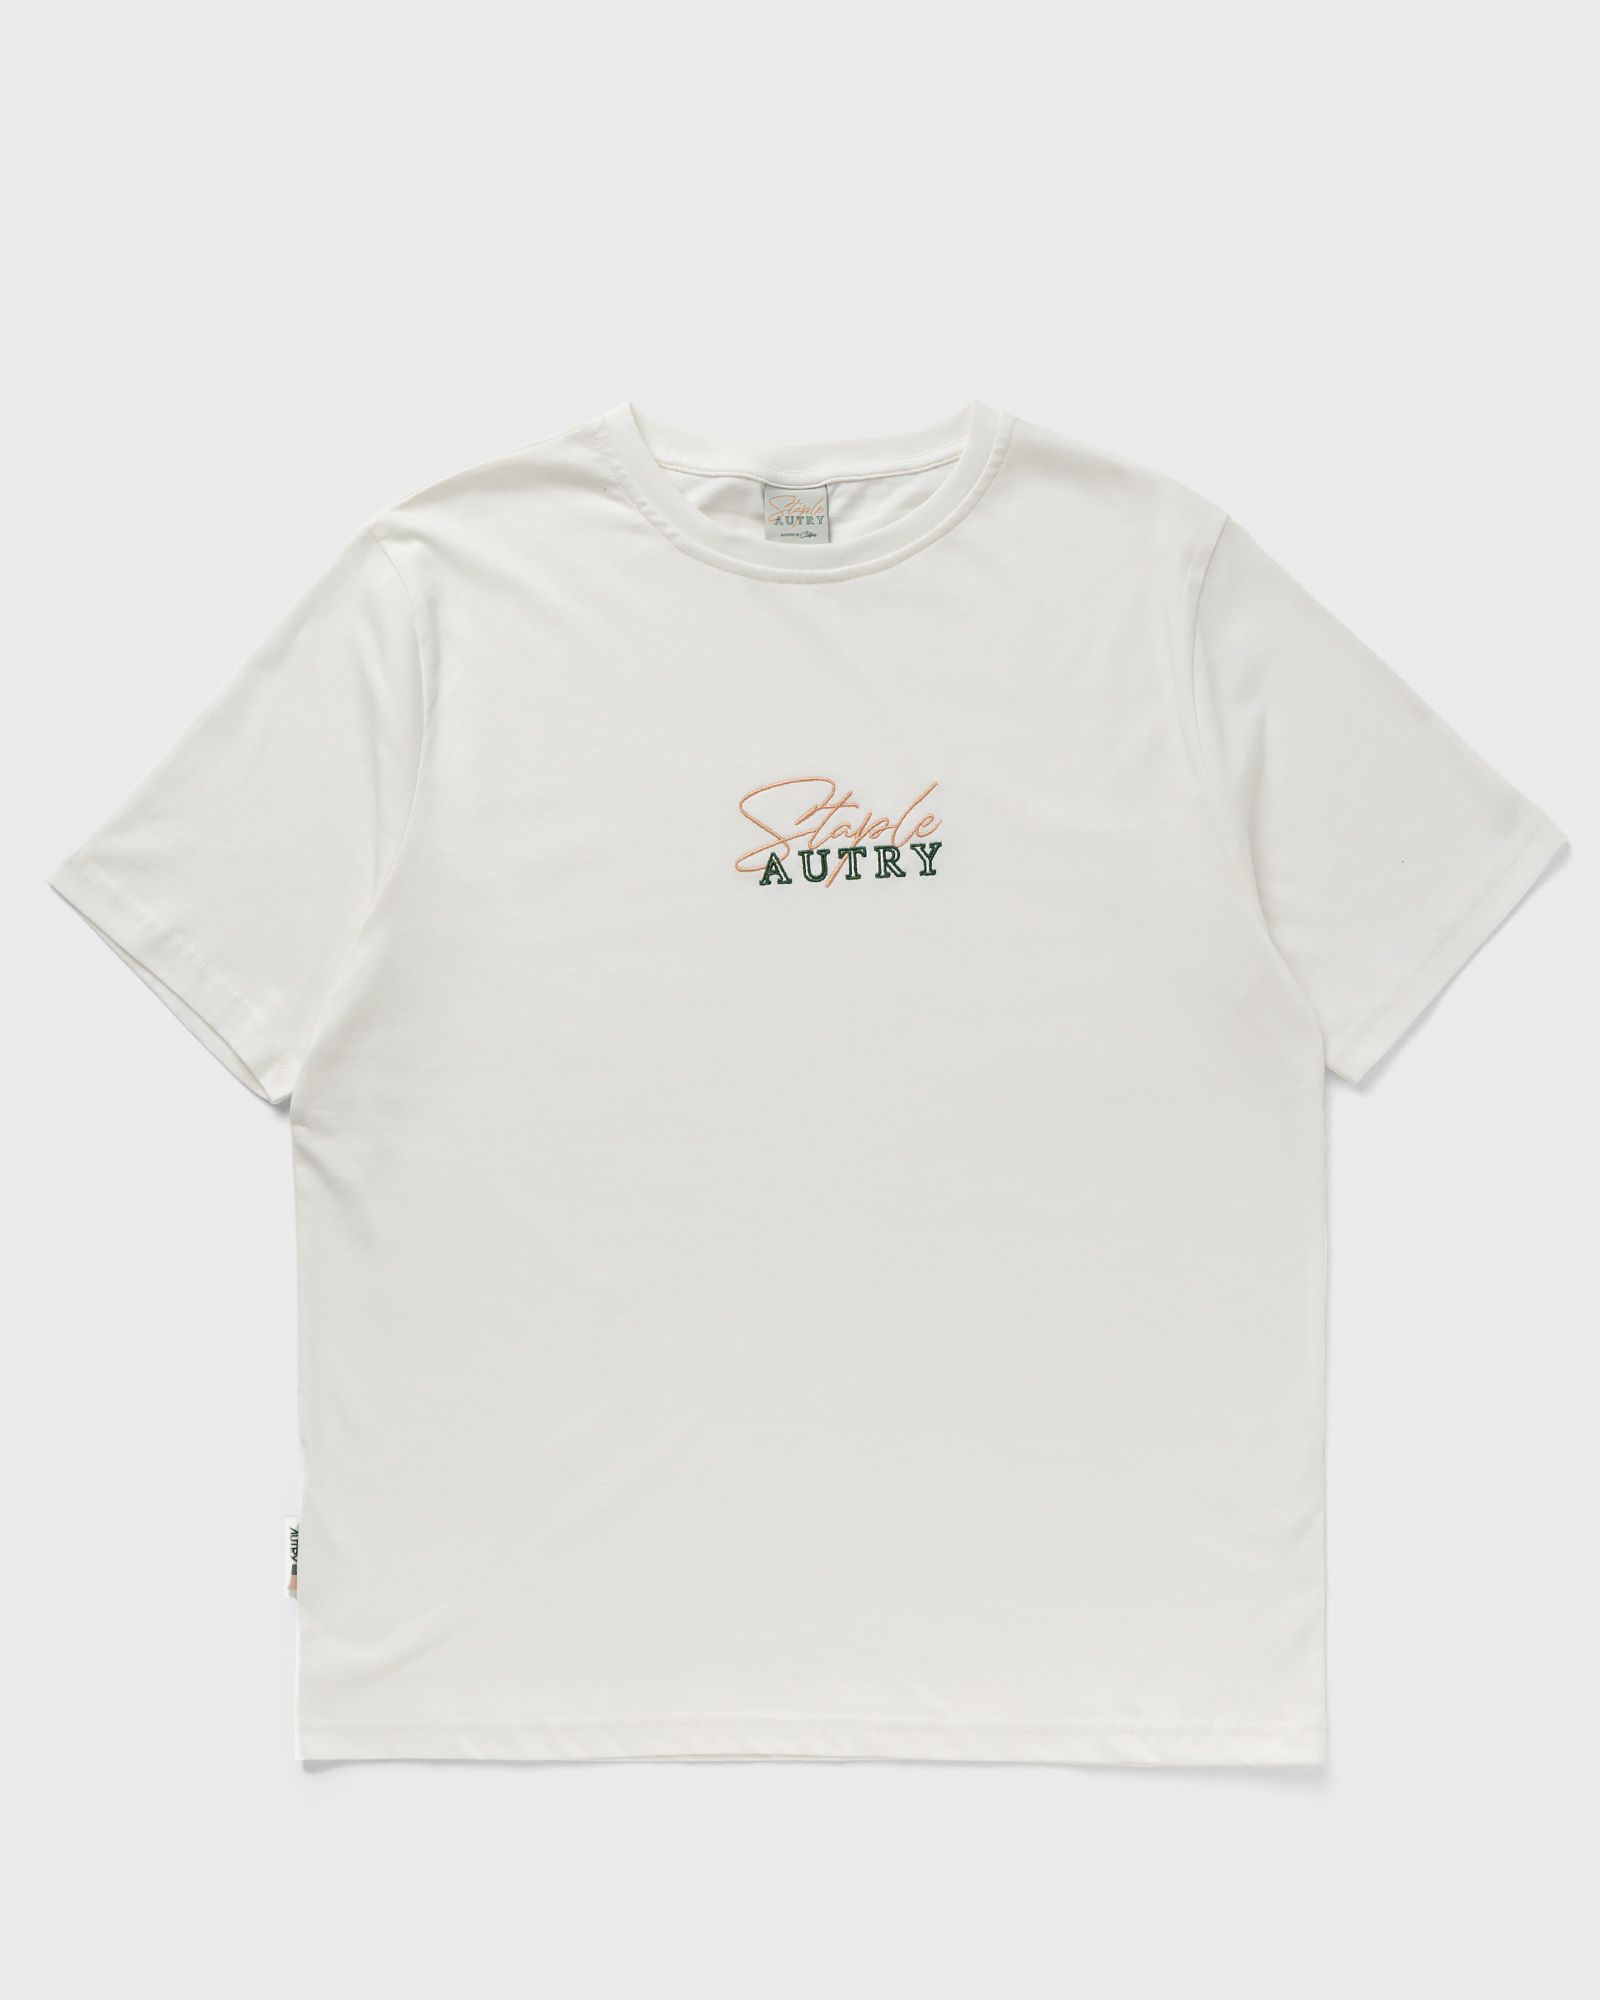 Autry Action Shoes - autry x staple t-shirt men shortsleeves white in größe:xl